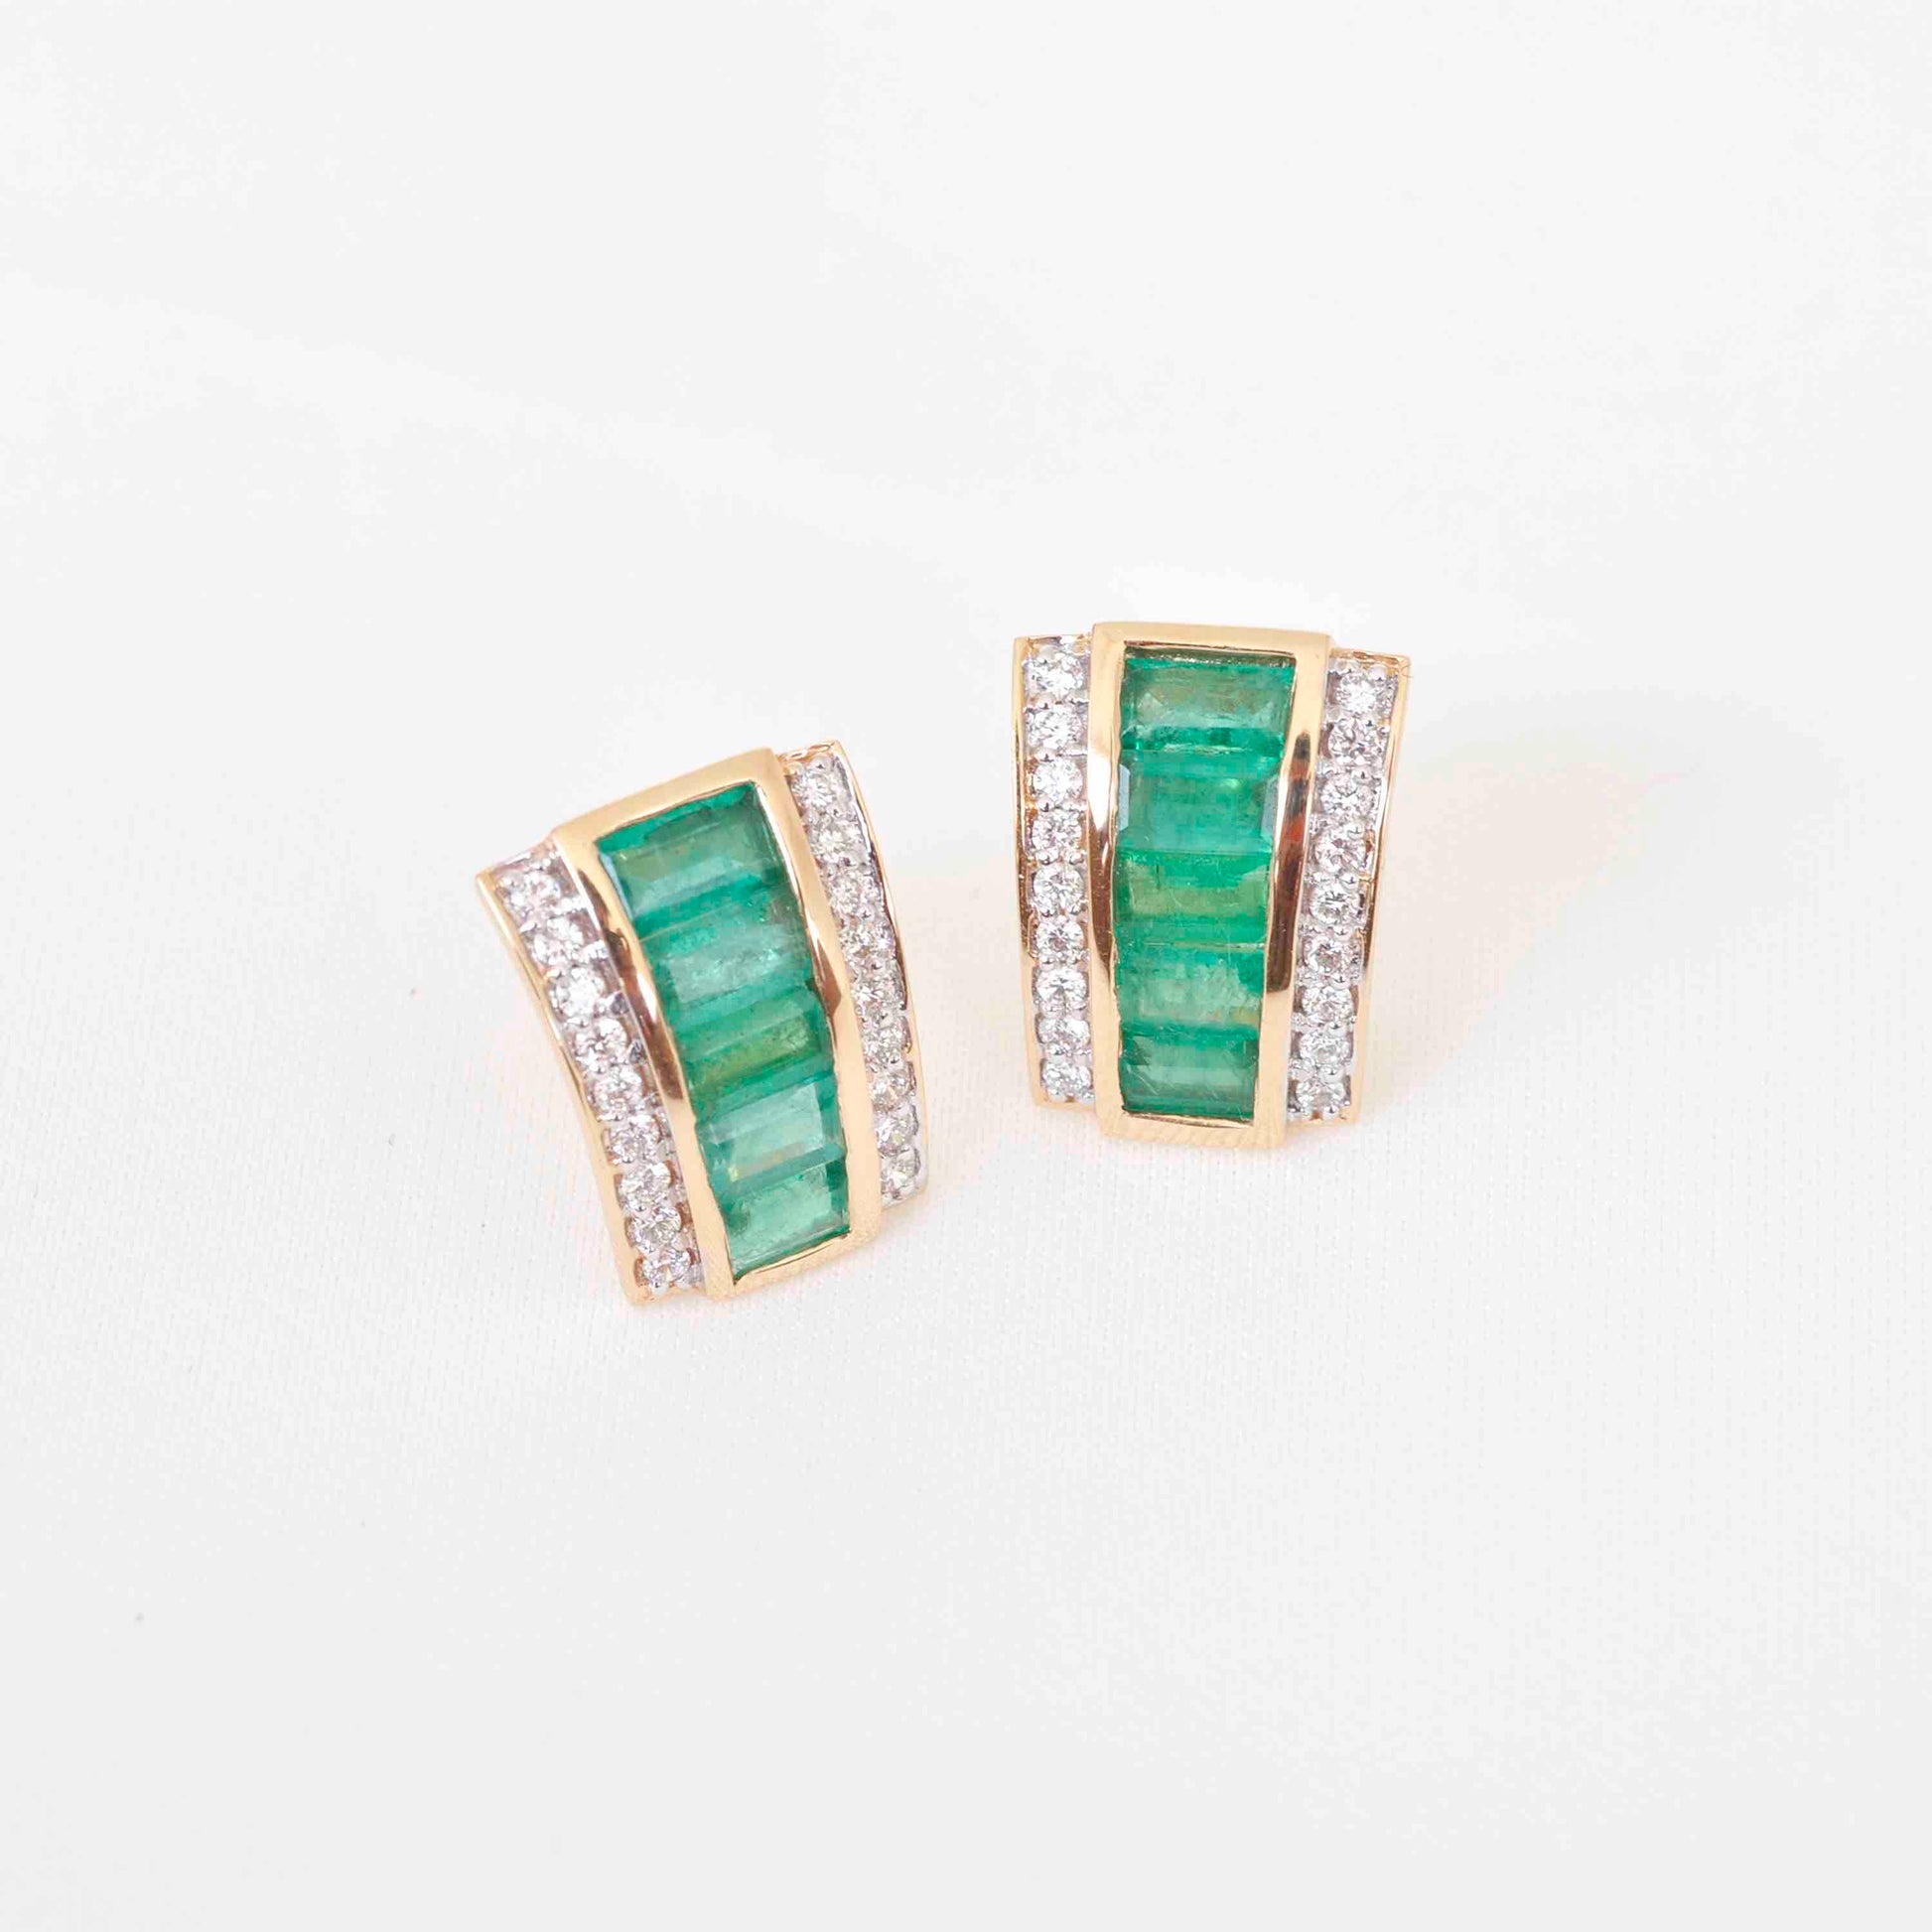 Zambian emerald earrings gold